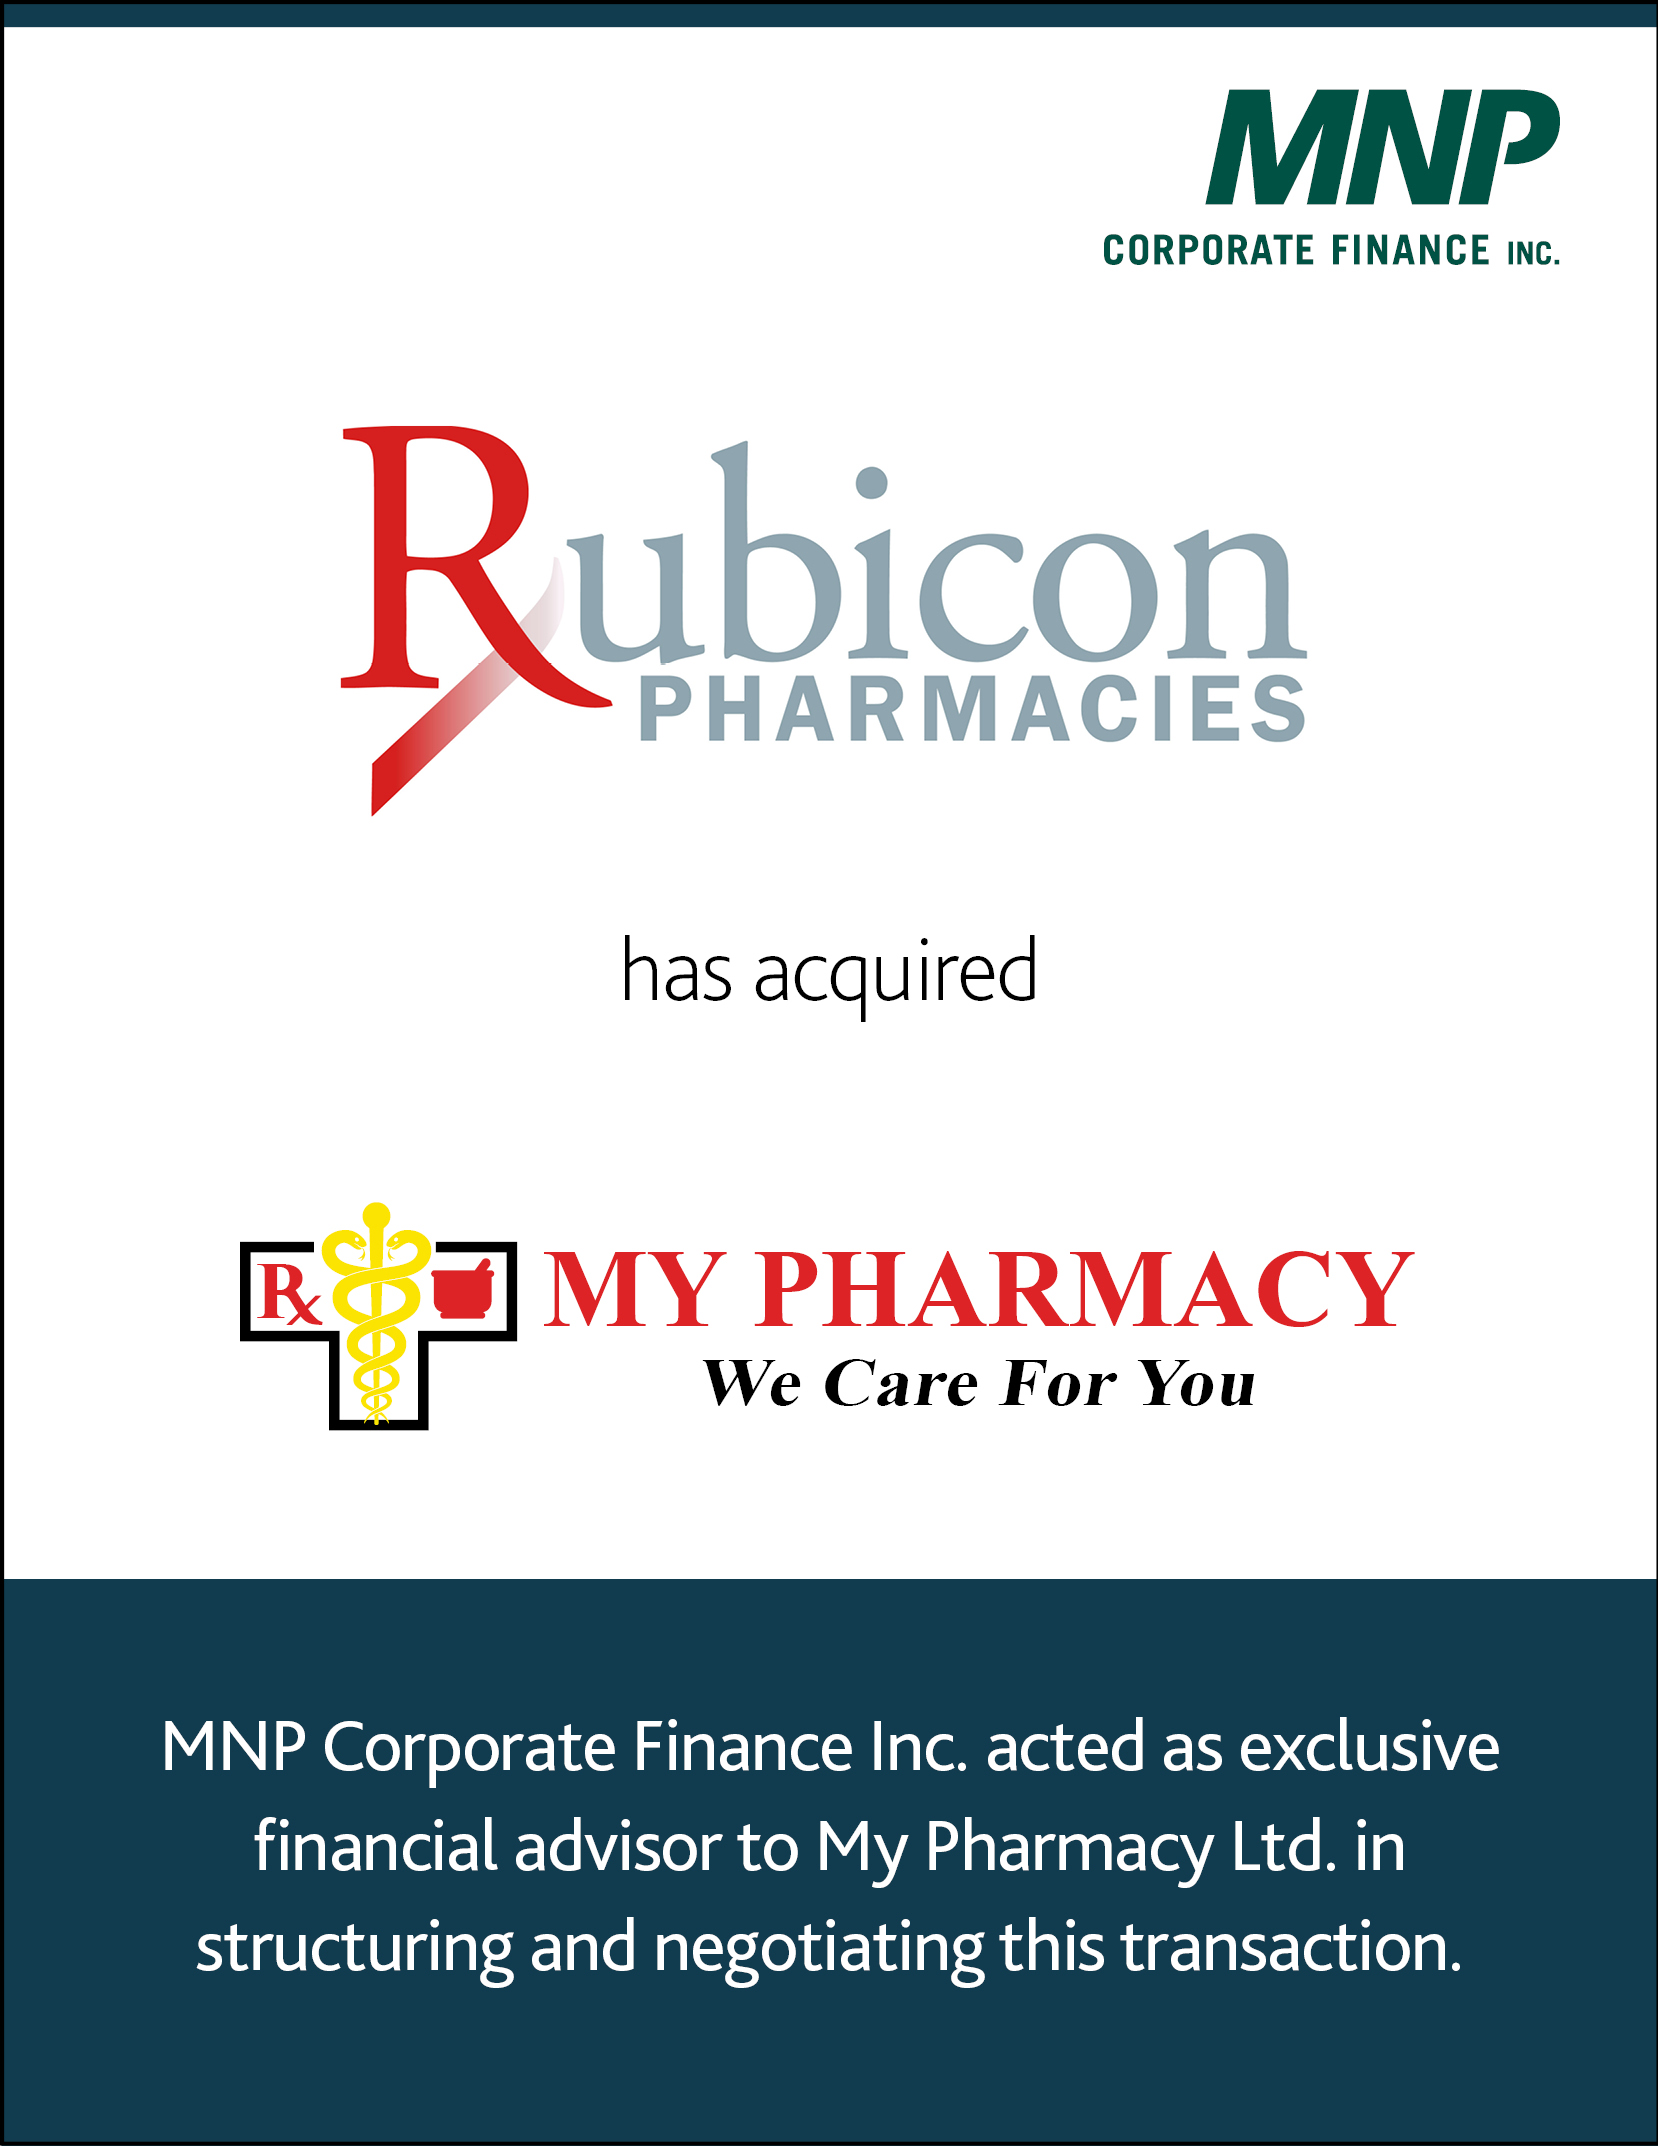 Rubicon Pharmacies has acquired My Pharmacy Ltd.